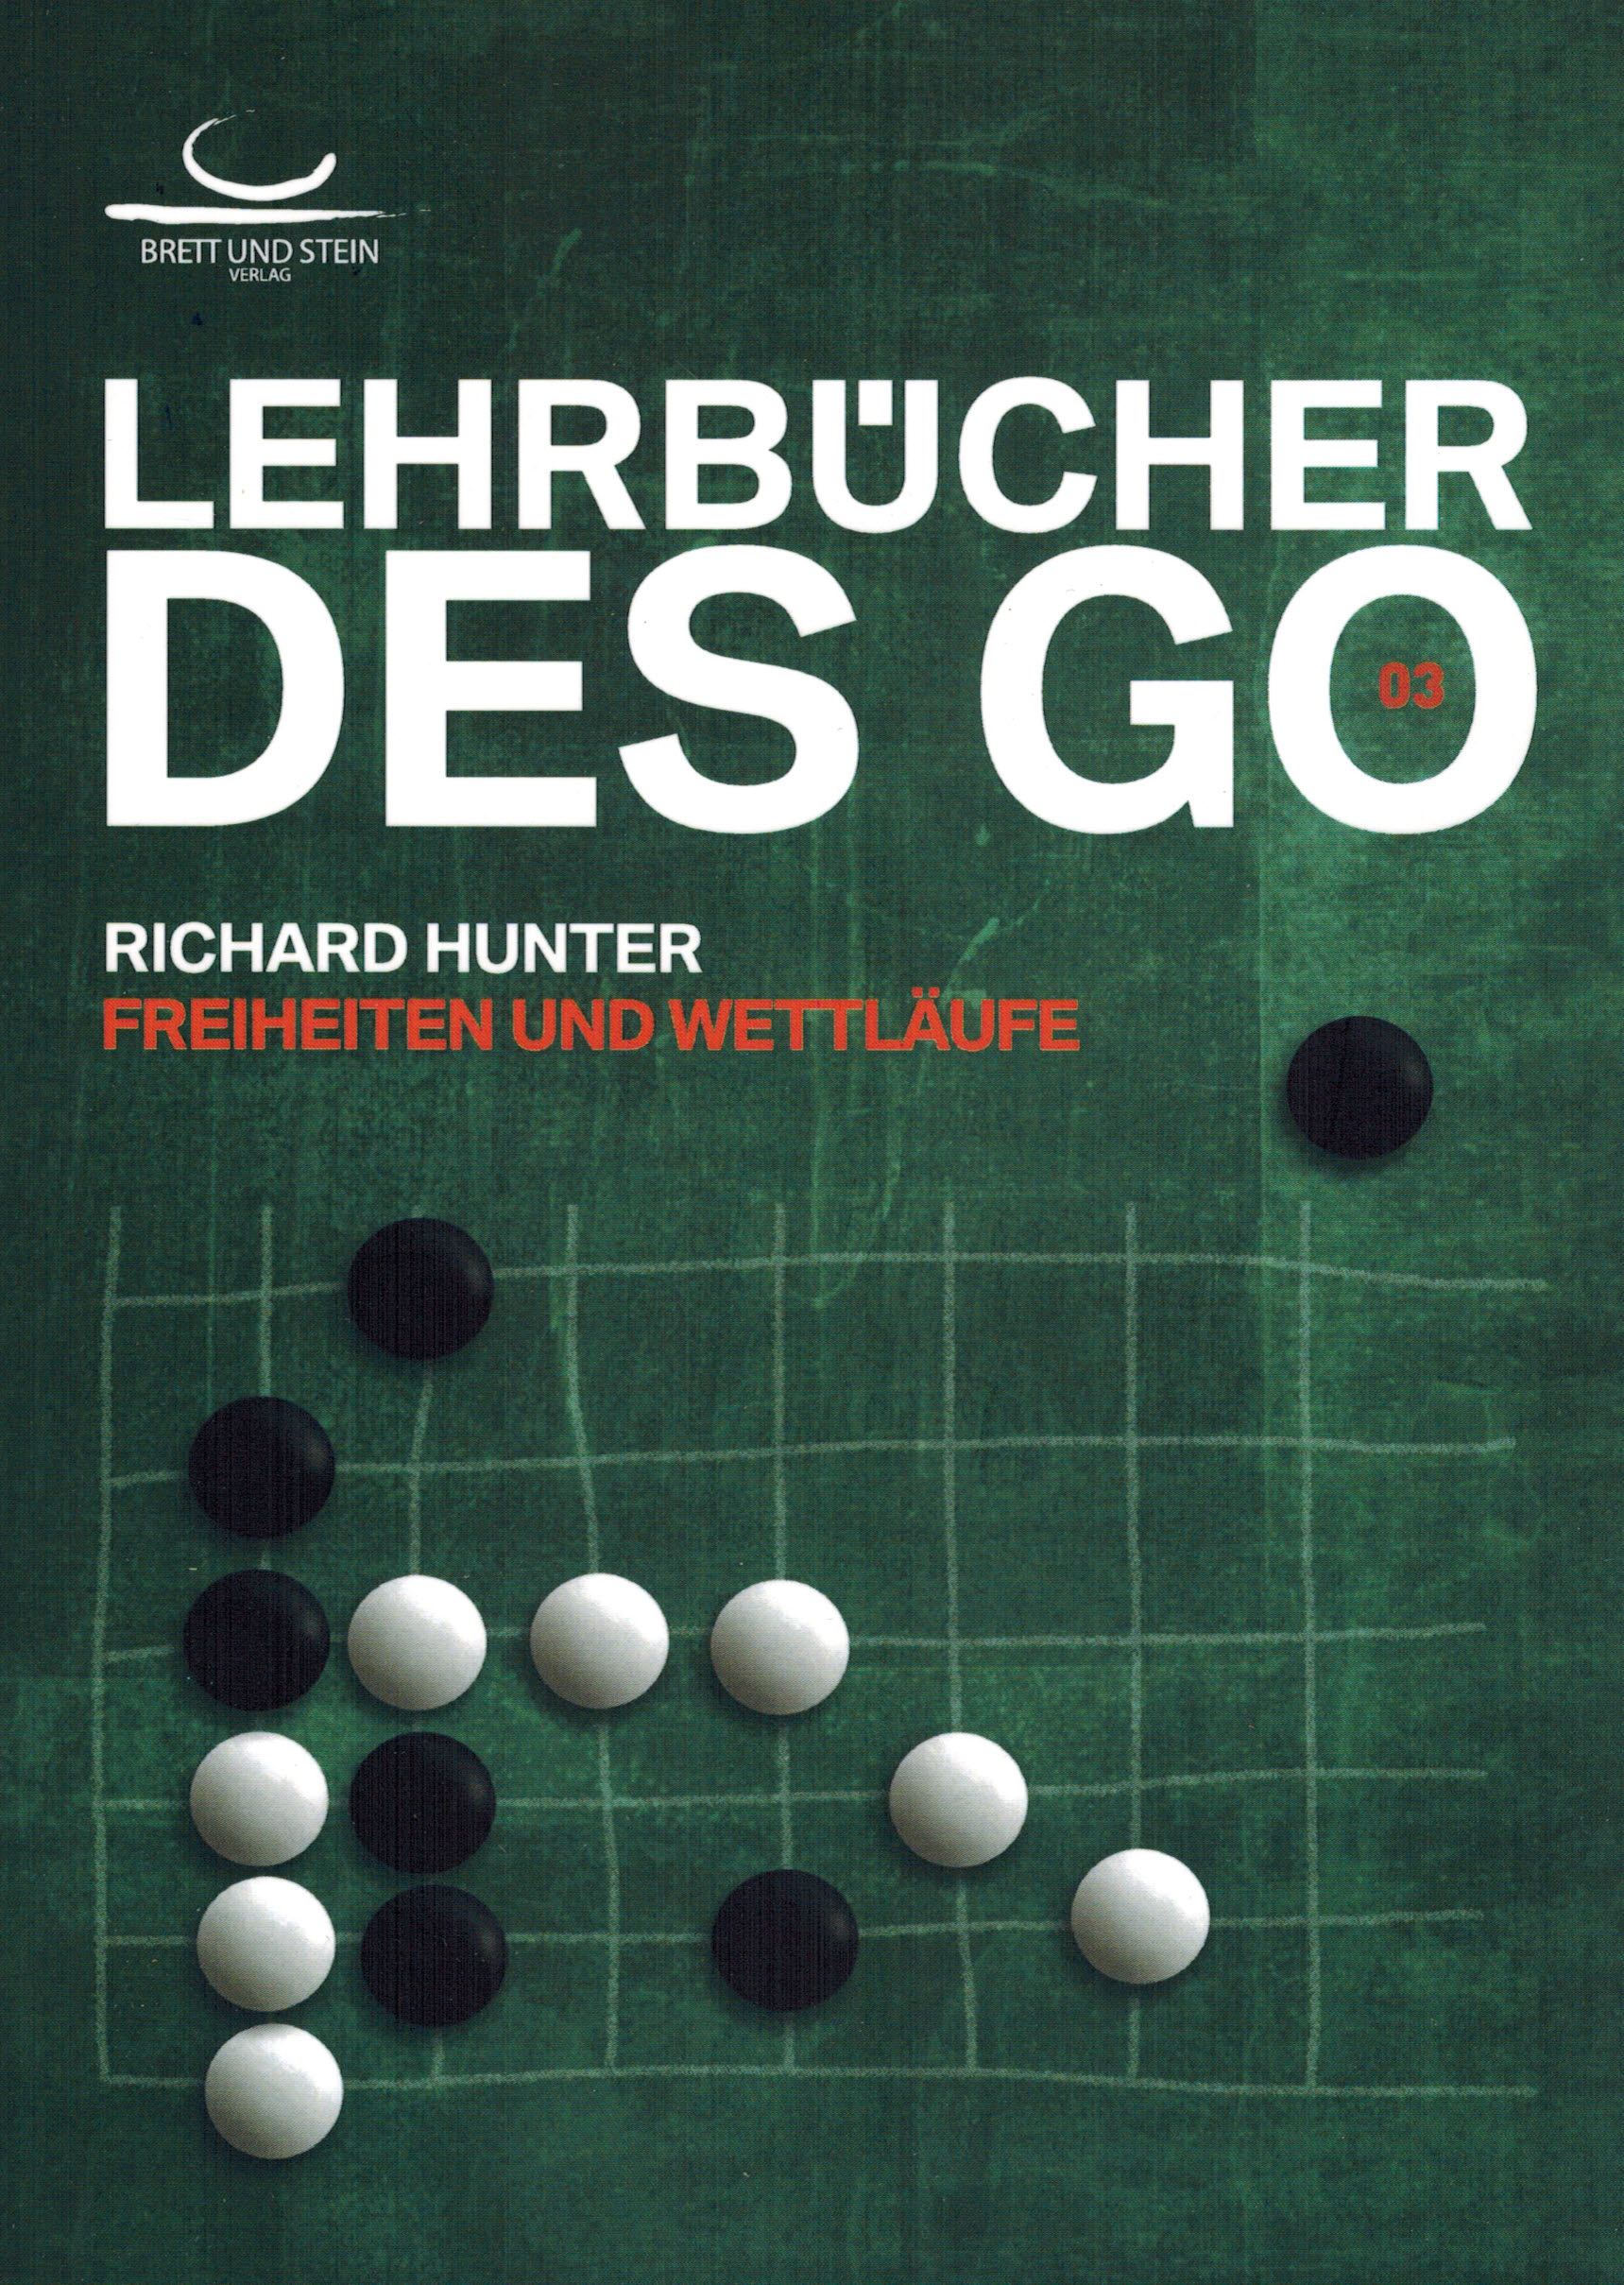 Lehrbücher des Go 03- Richard Hunter